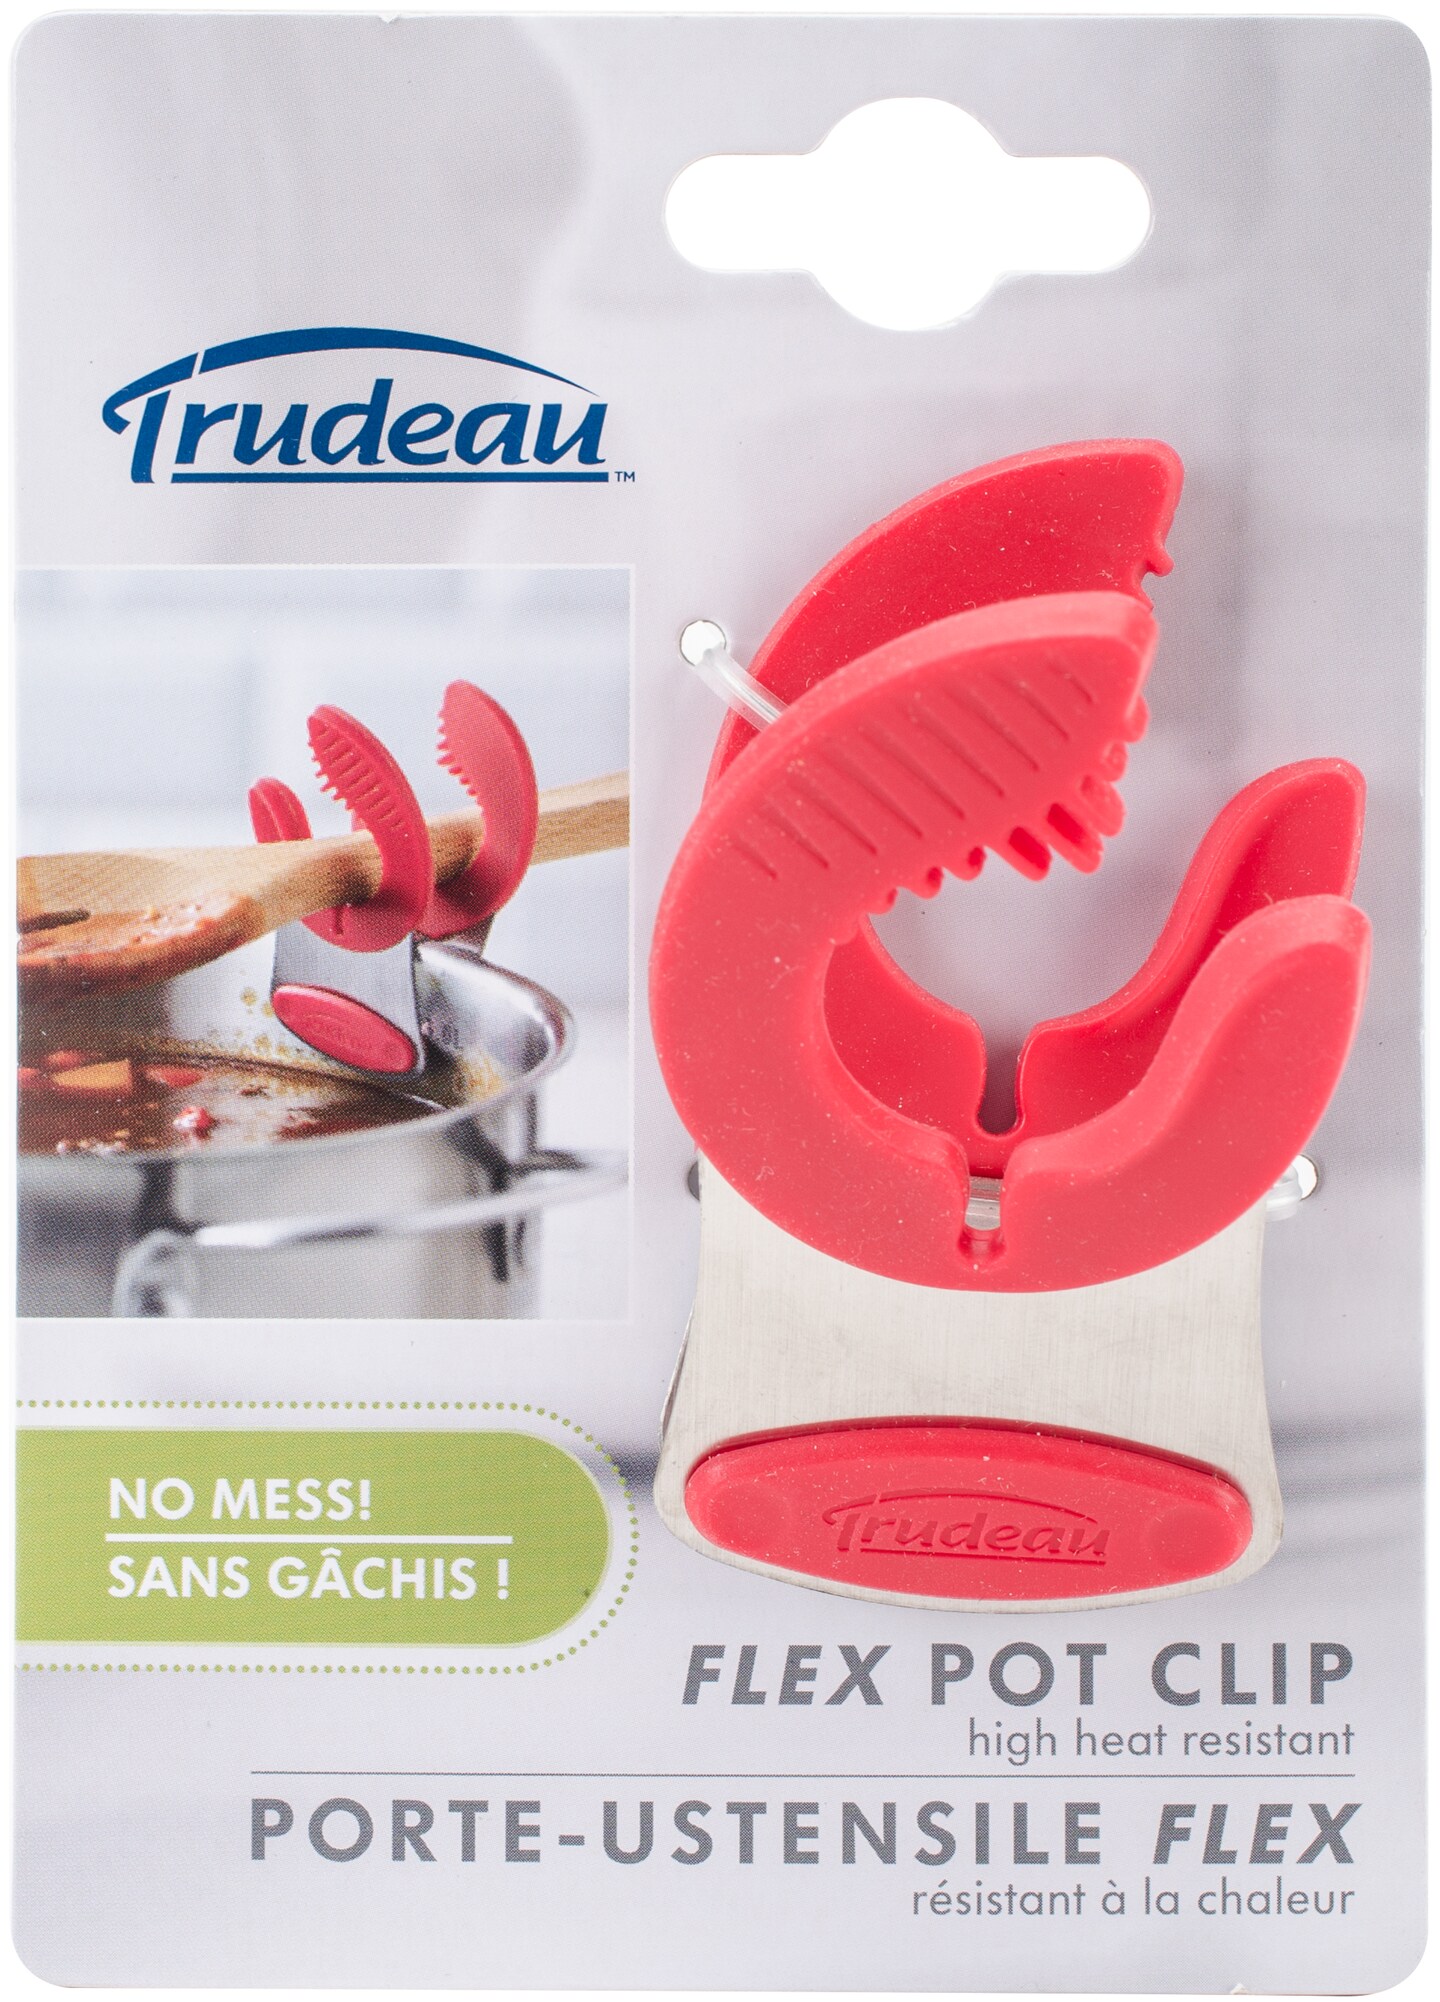 Trudeau Stainless Steel Flex Pot Clip-Red